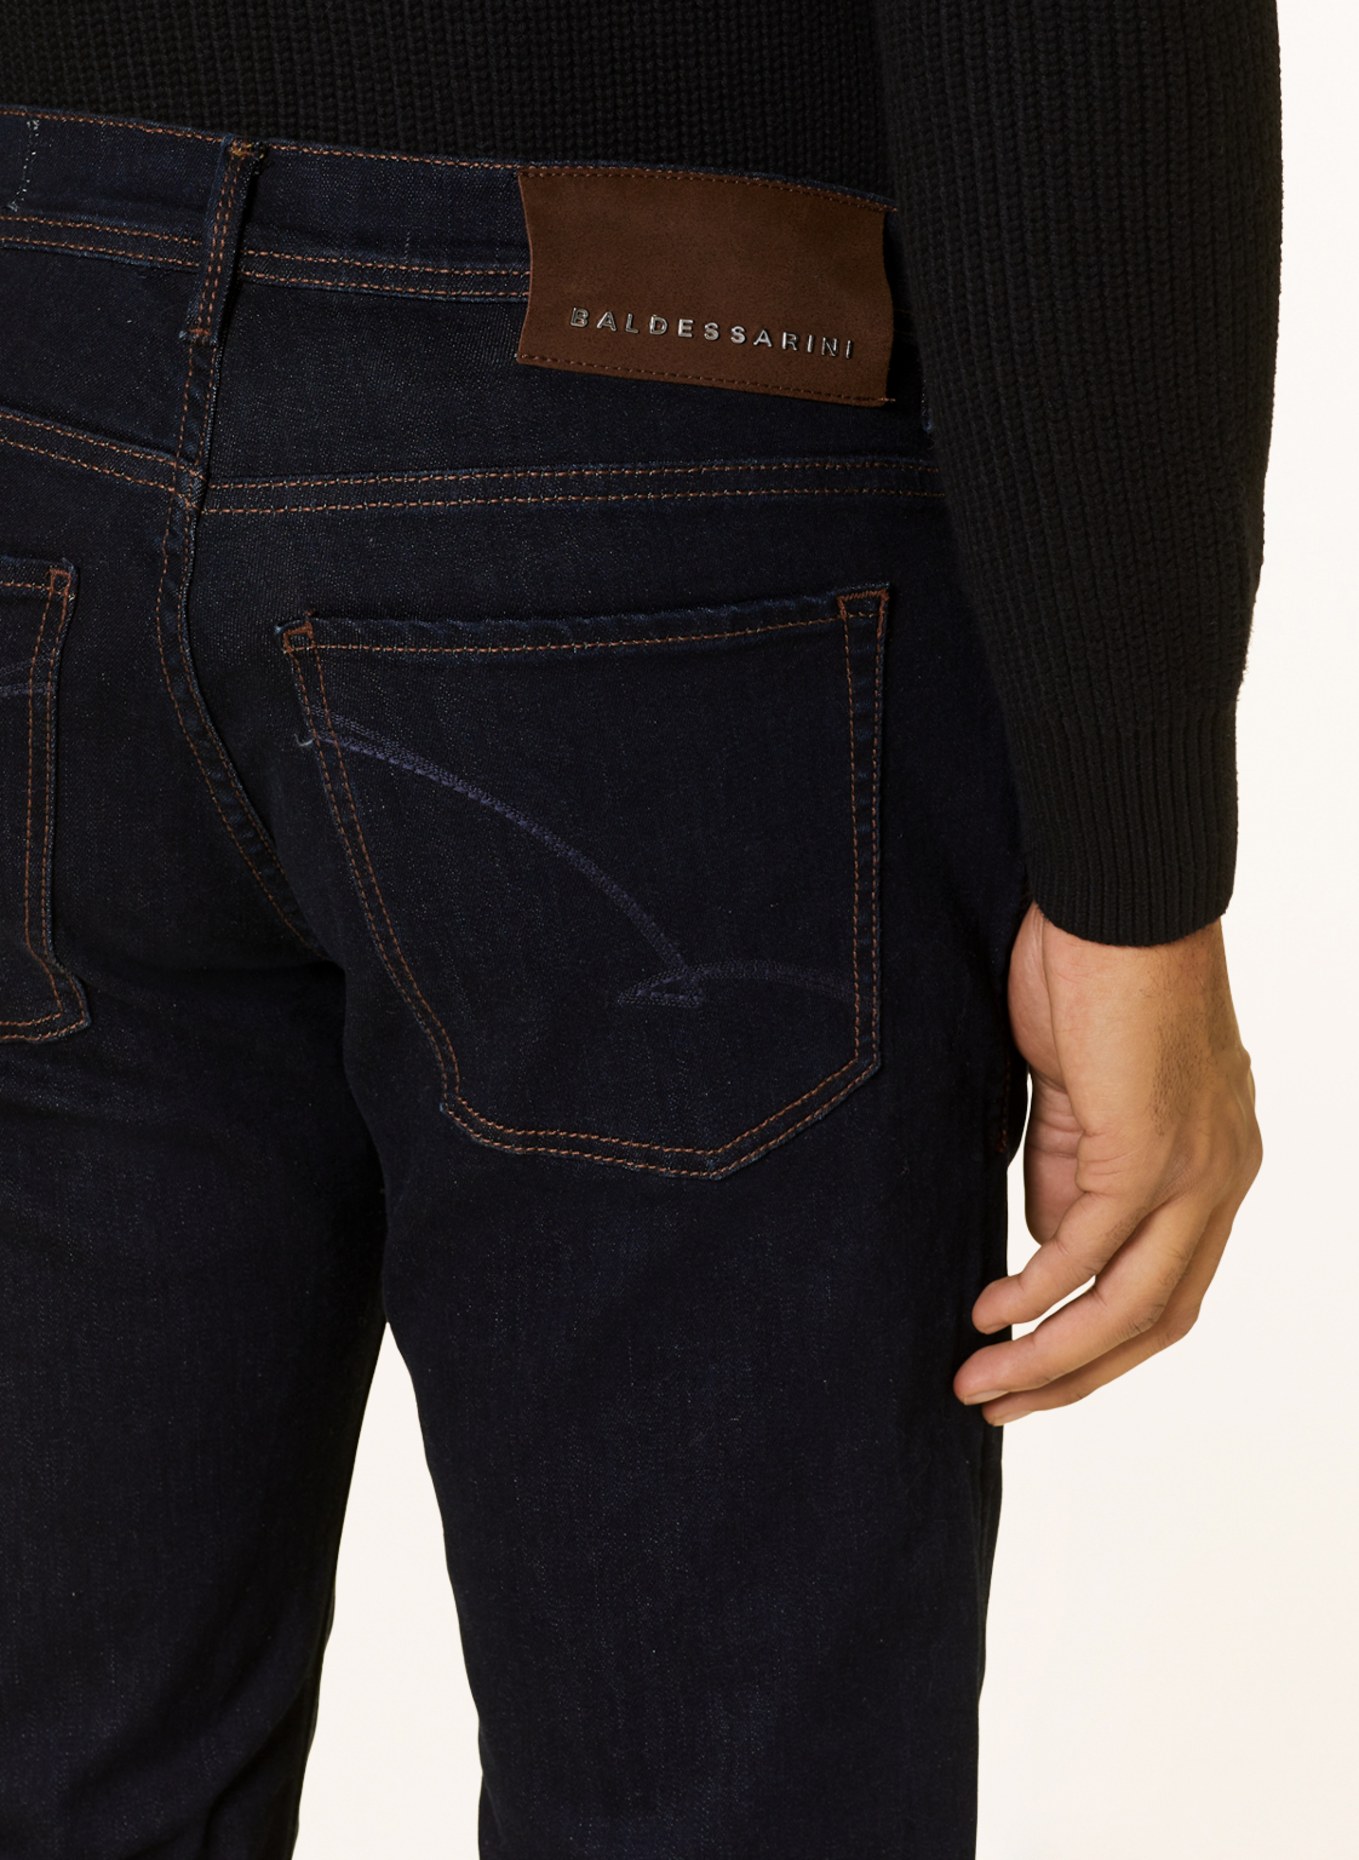 BALDESSARINI Jeans Regular Fit, Farbe: 6811 dark blue stonewash (Bild 6)